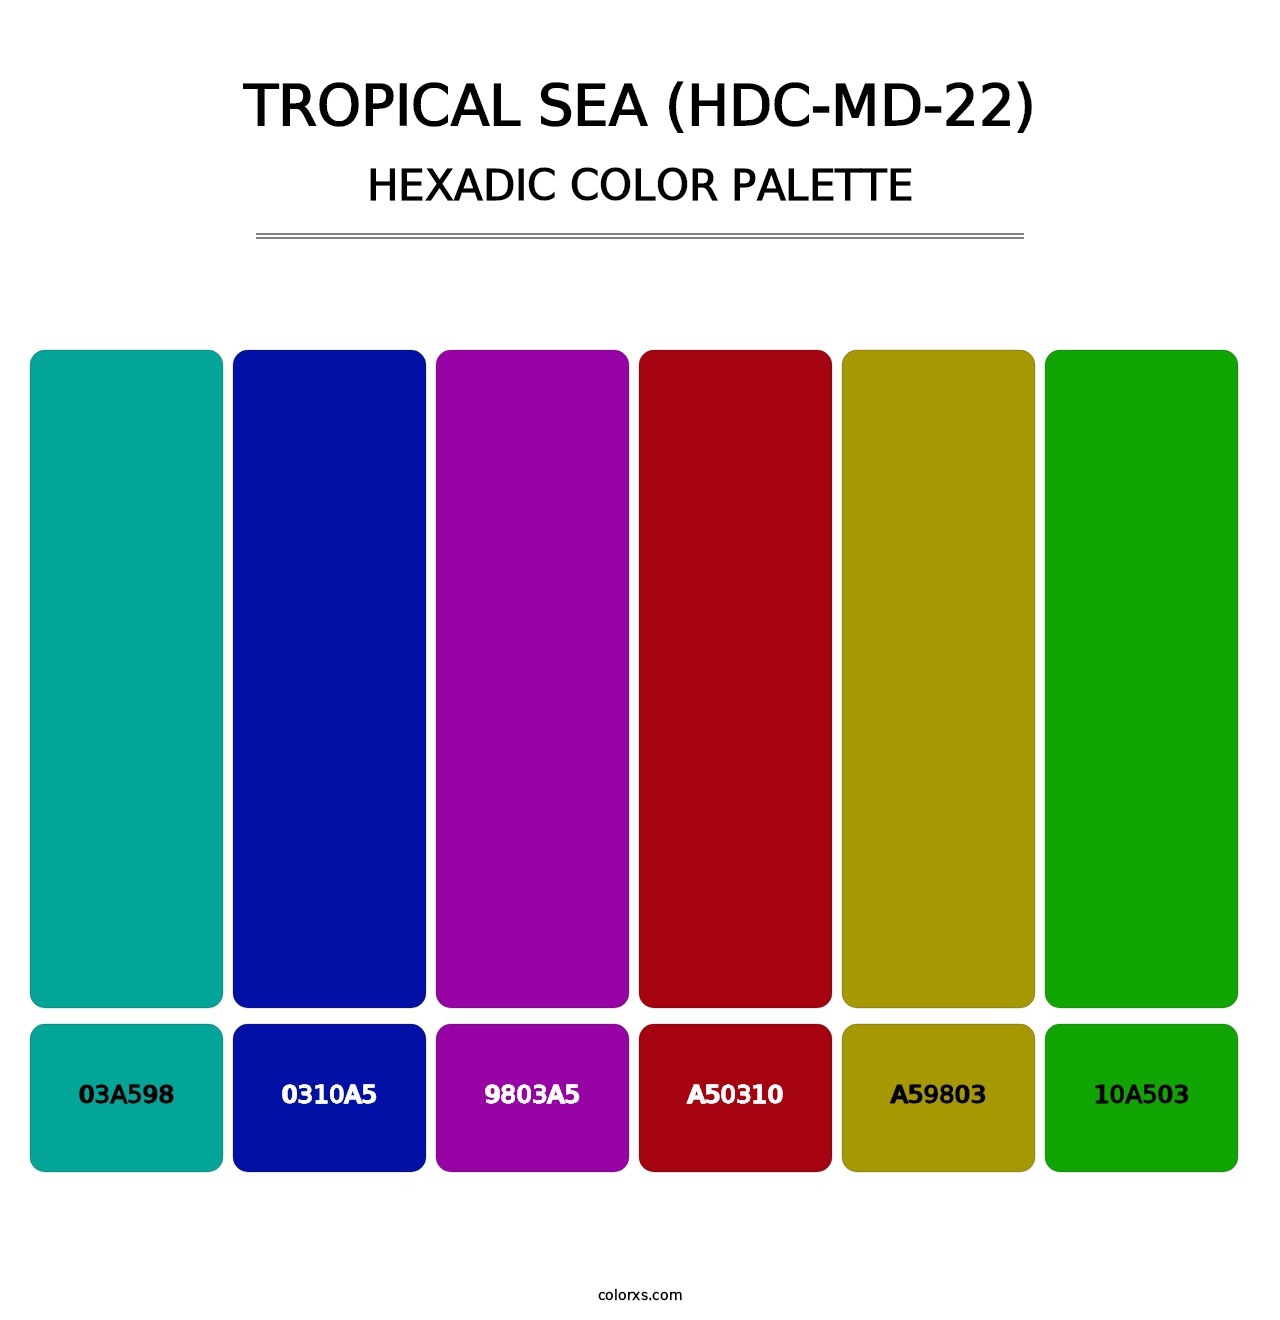 Tropical Sea (HDC-MD-22) - Hexadic Color Palette